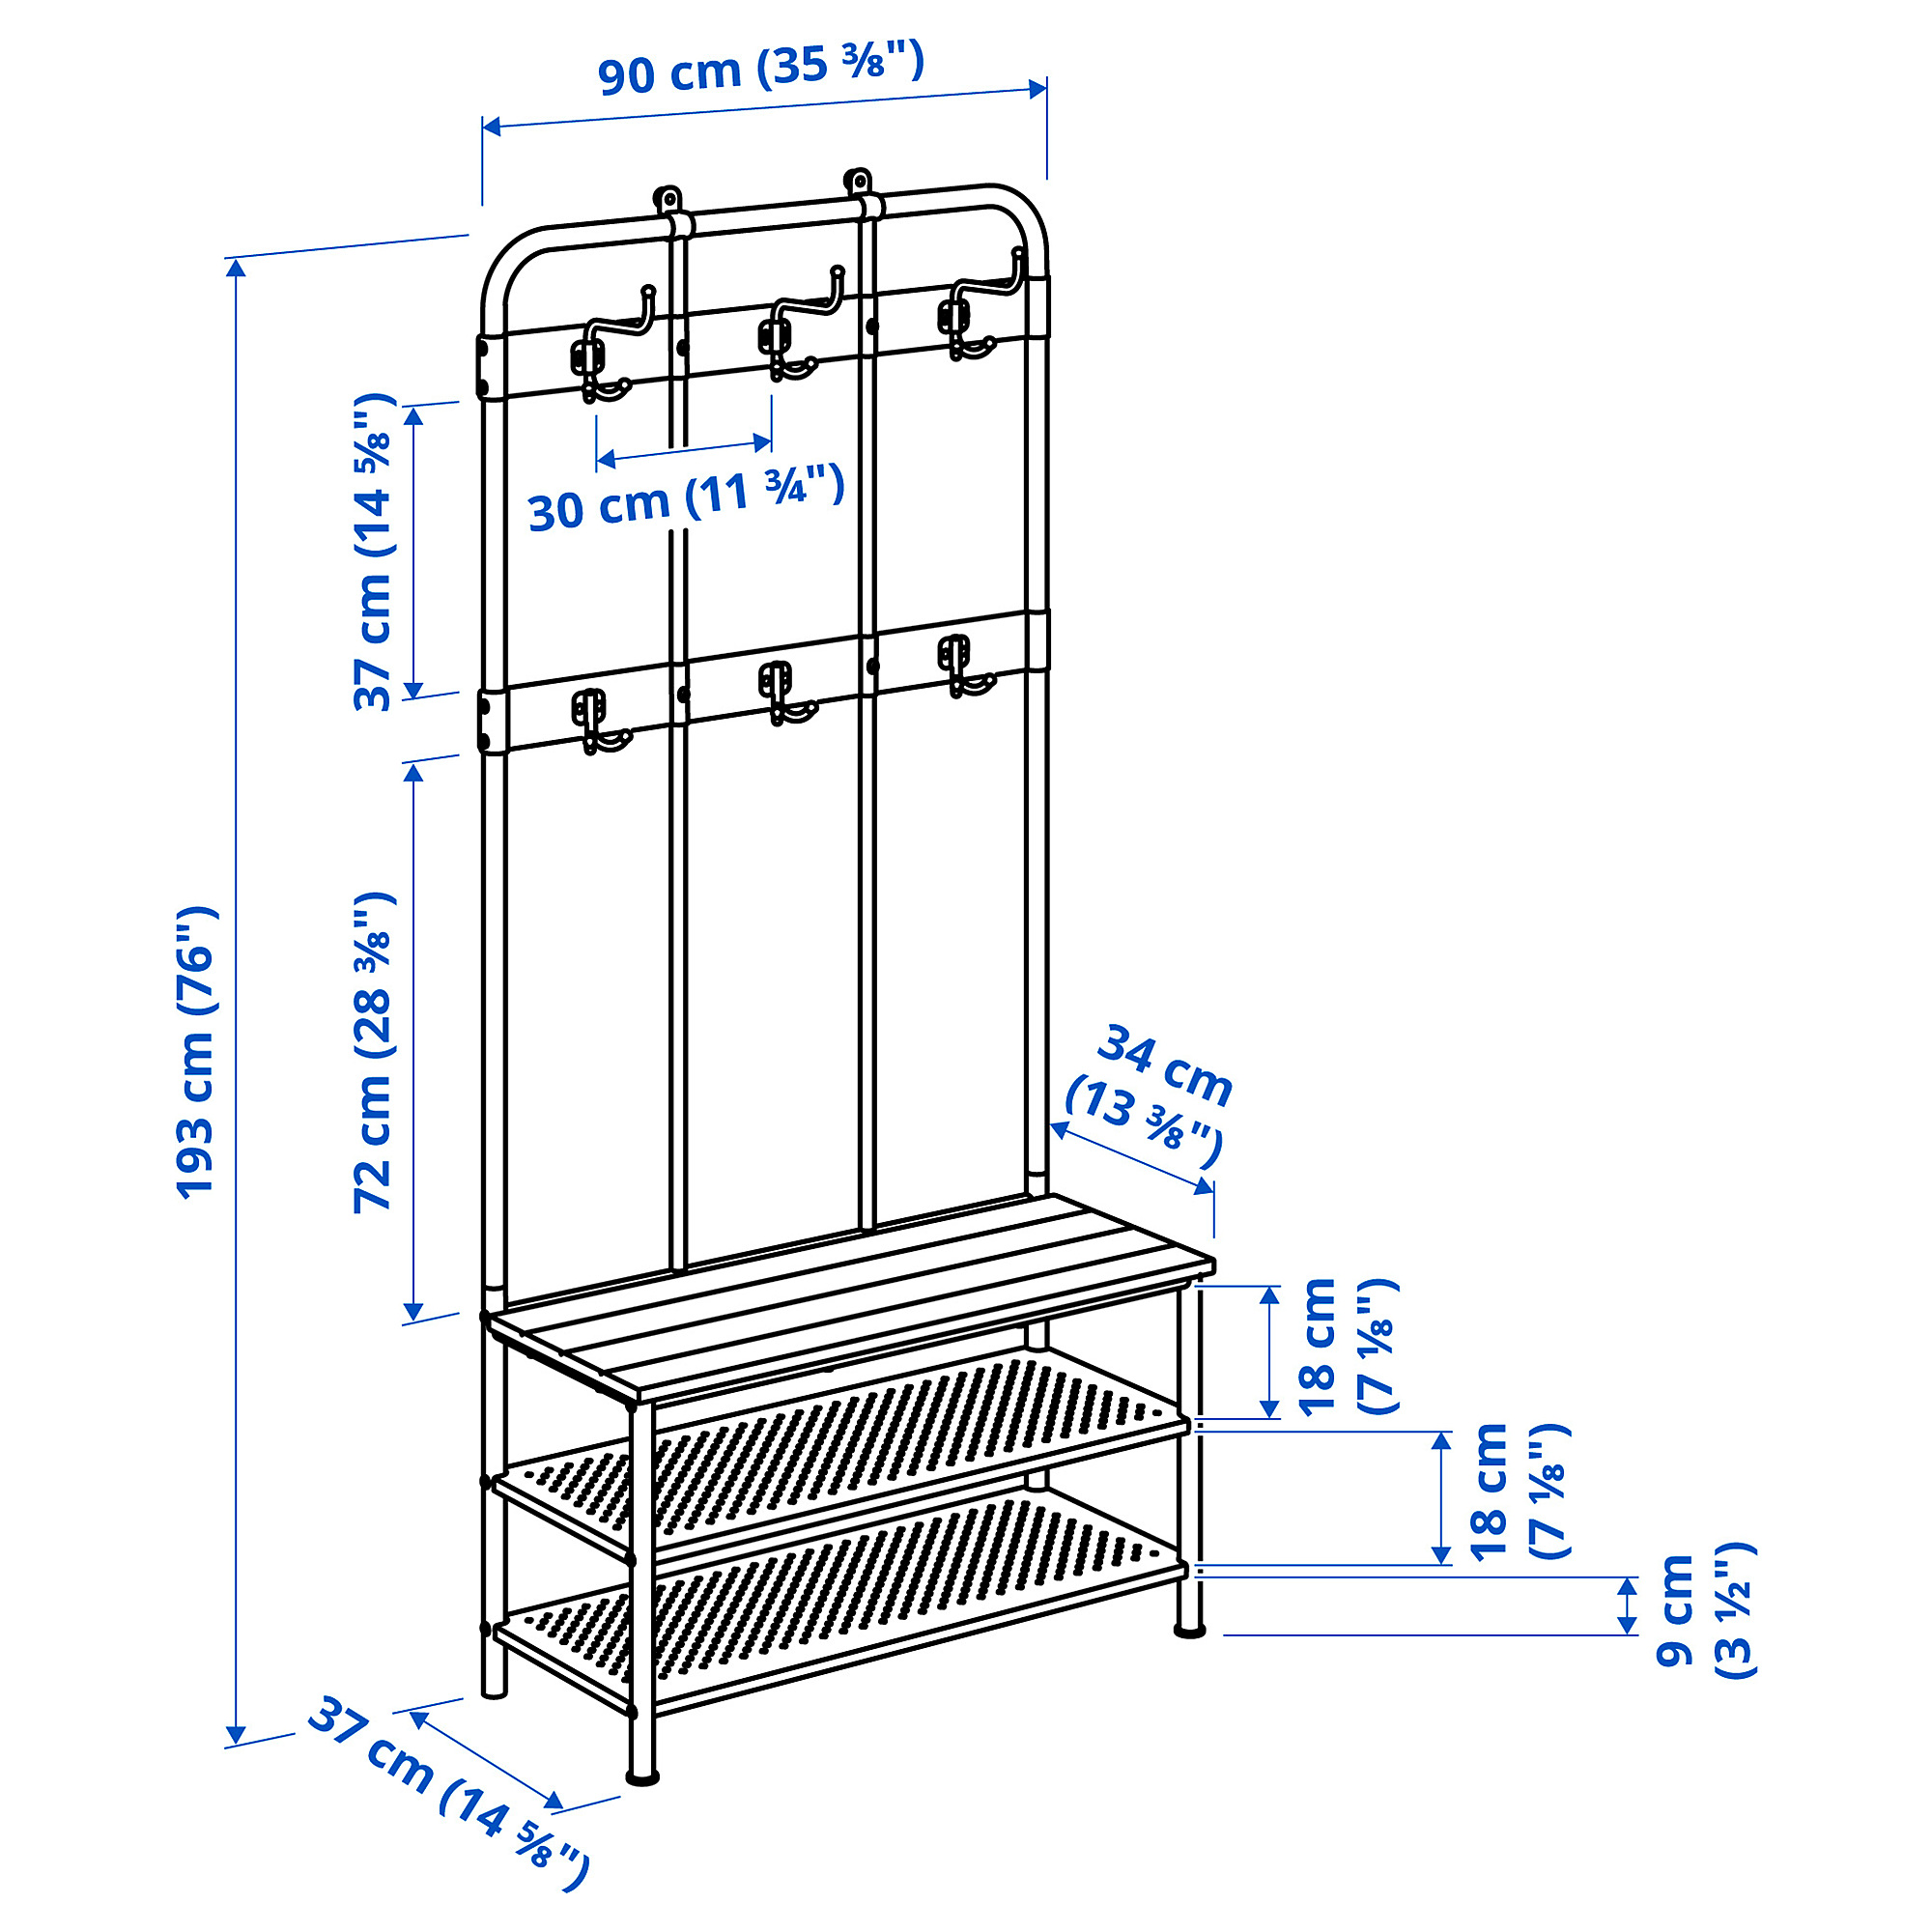 PINNIG coat rack with shoe storage bench